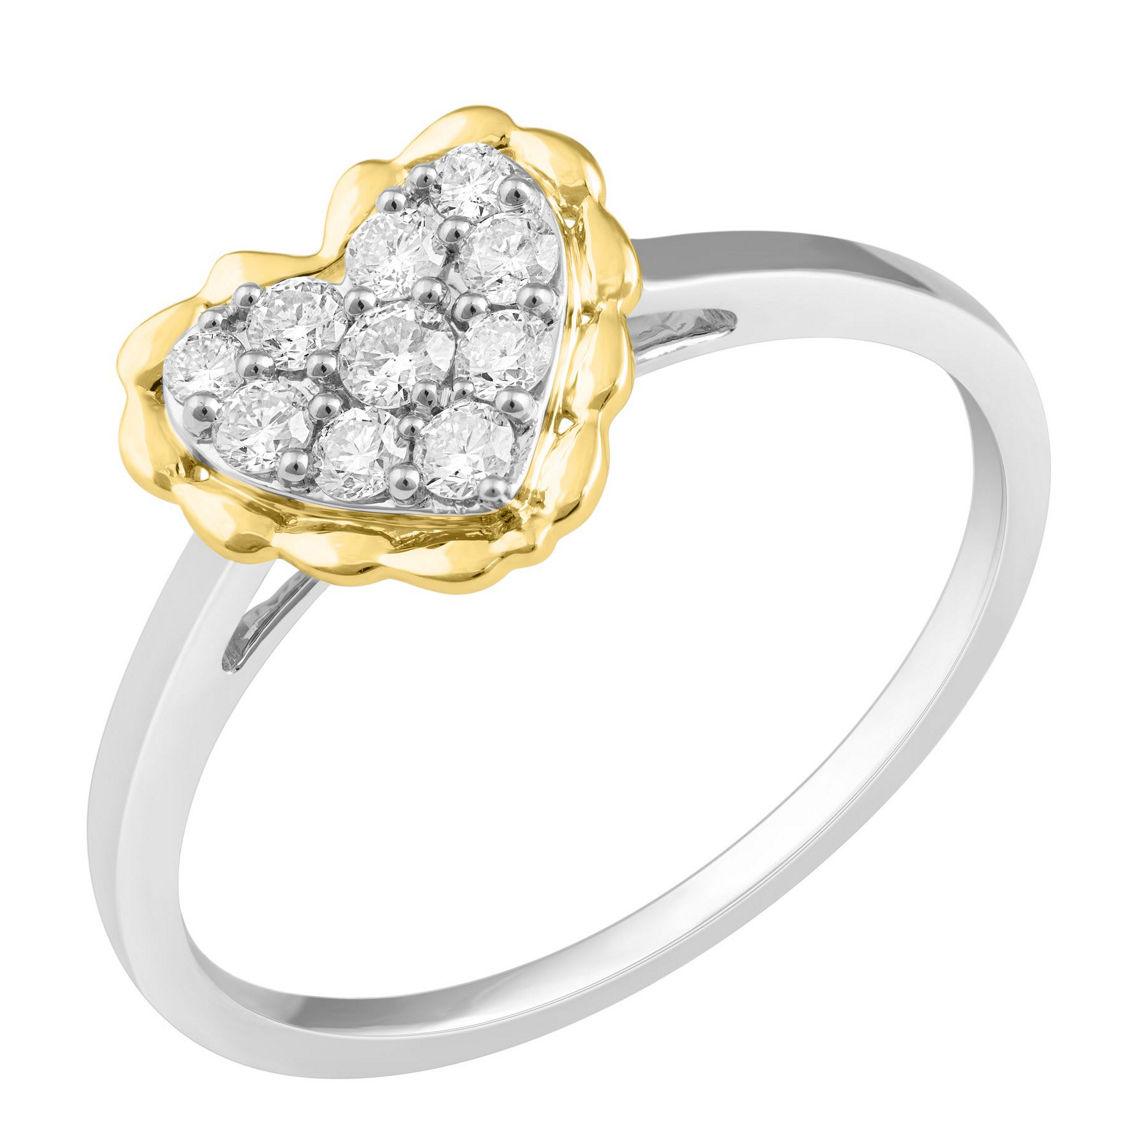 APMG 14K White & Yellow Gold 1/4 CTW Diamond Heart Cluster Ring - Image 2 of 4